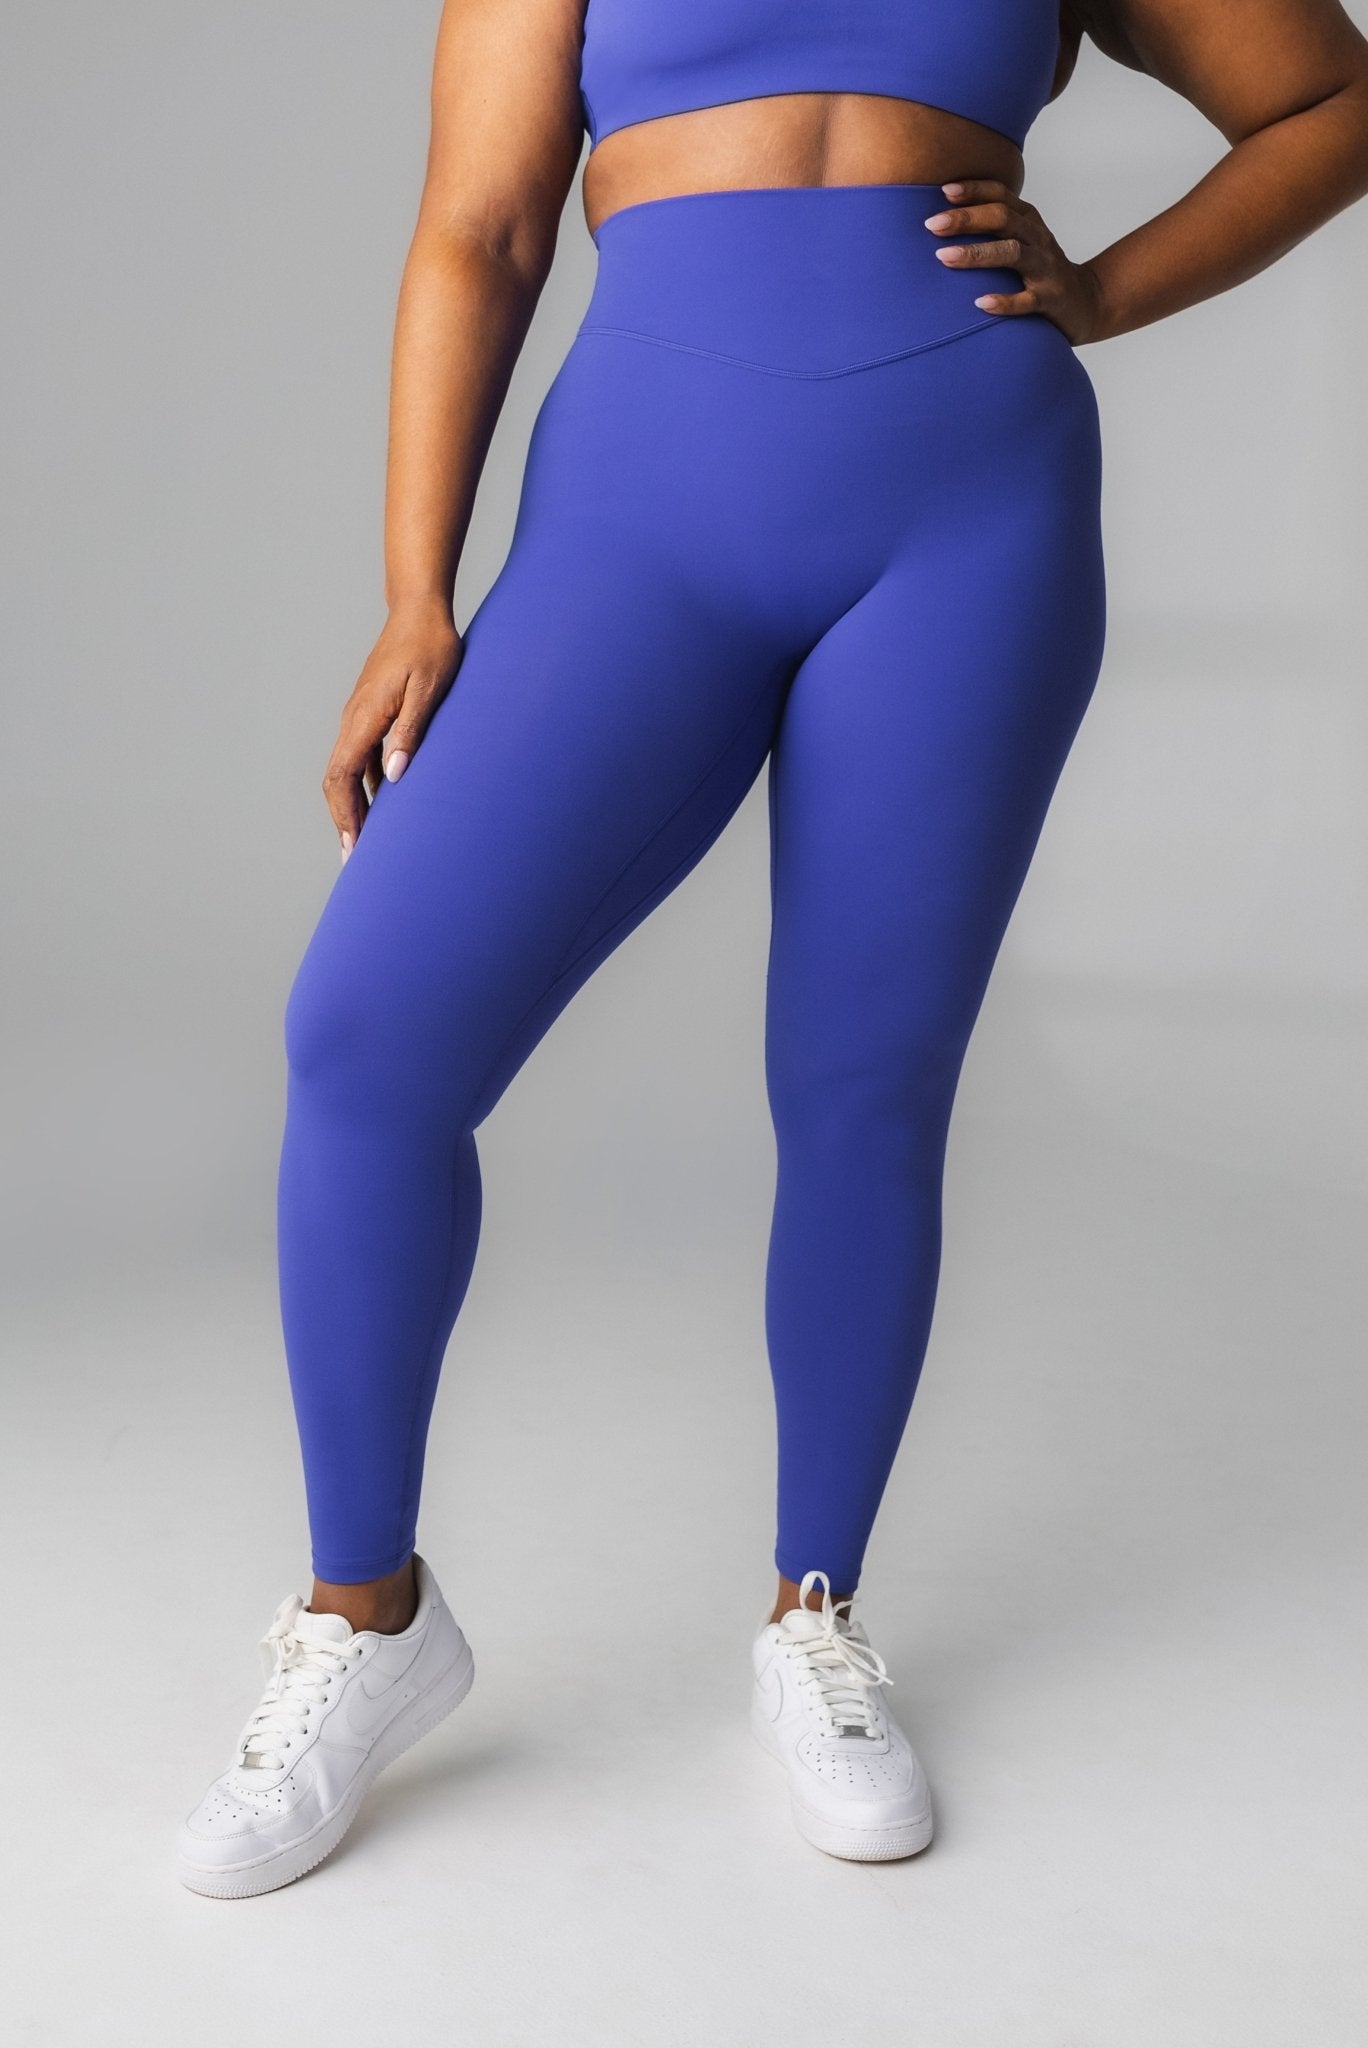 Seamless Sports Leggings Women Breathable High Waist Yoga Pants Hip Lift  Tight Running Fitness Gym Leggings Women Workout Pants - AliExpress